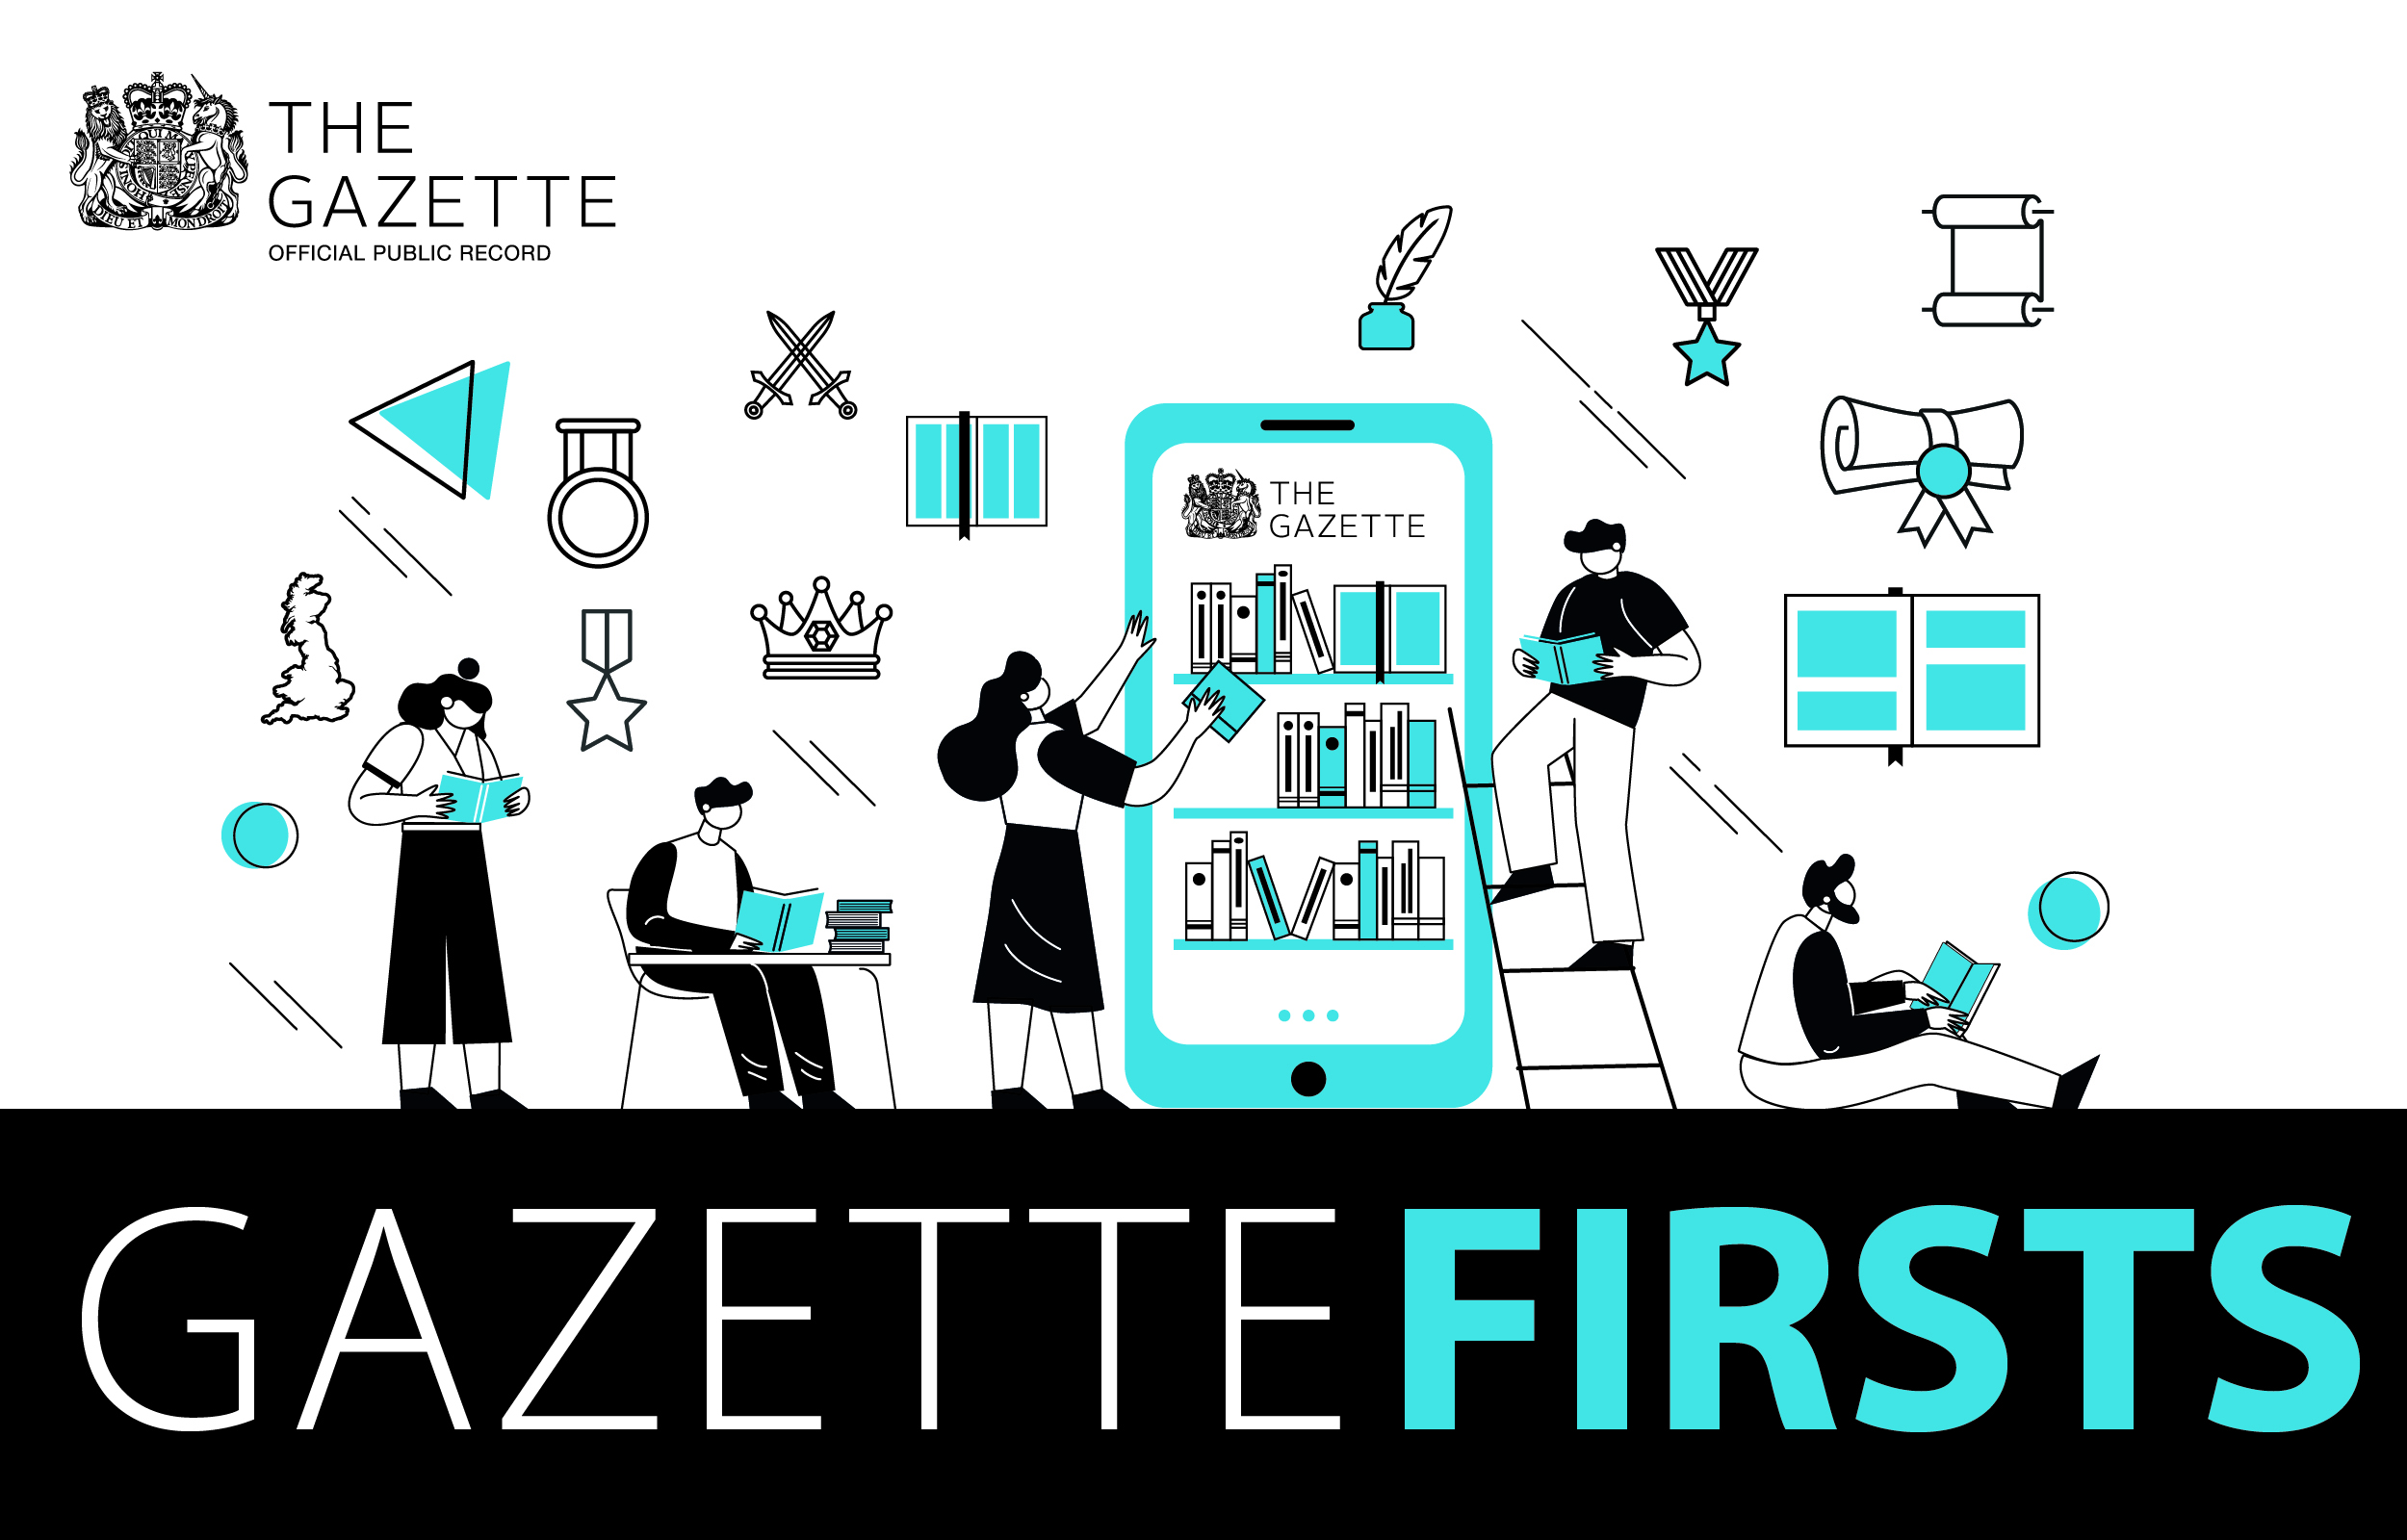 Gazette Firsts Royal Births